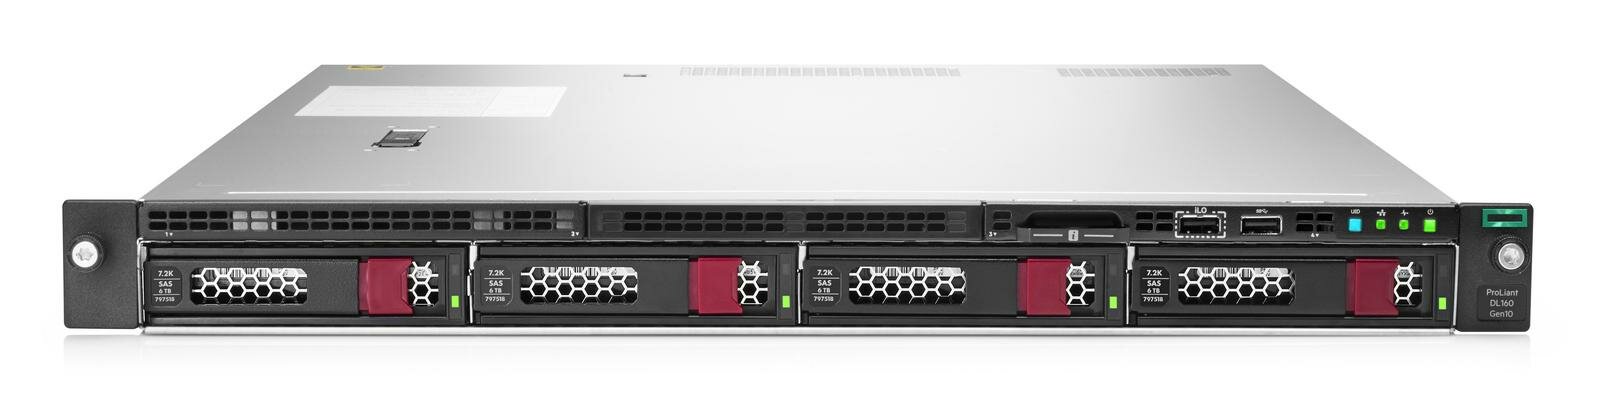 Сервер HPE Proliant DL160 Gen10, 1(up2)x 3204 Xeon-B 6C 1.9GHz, 1x16GB-R DDR4, S100i/ZM (RAID 0,1,5,10) noHDD (4 LFF 3.5 HP) 1x500W (up2), 2x1Gb/s, noDVD, iLO5, Rack1U, 3-3-3 P19559-B21